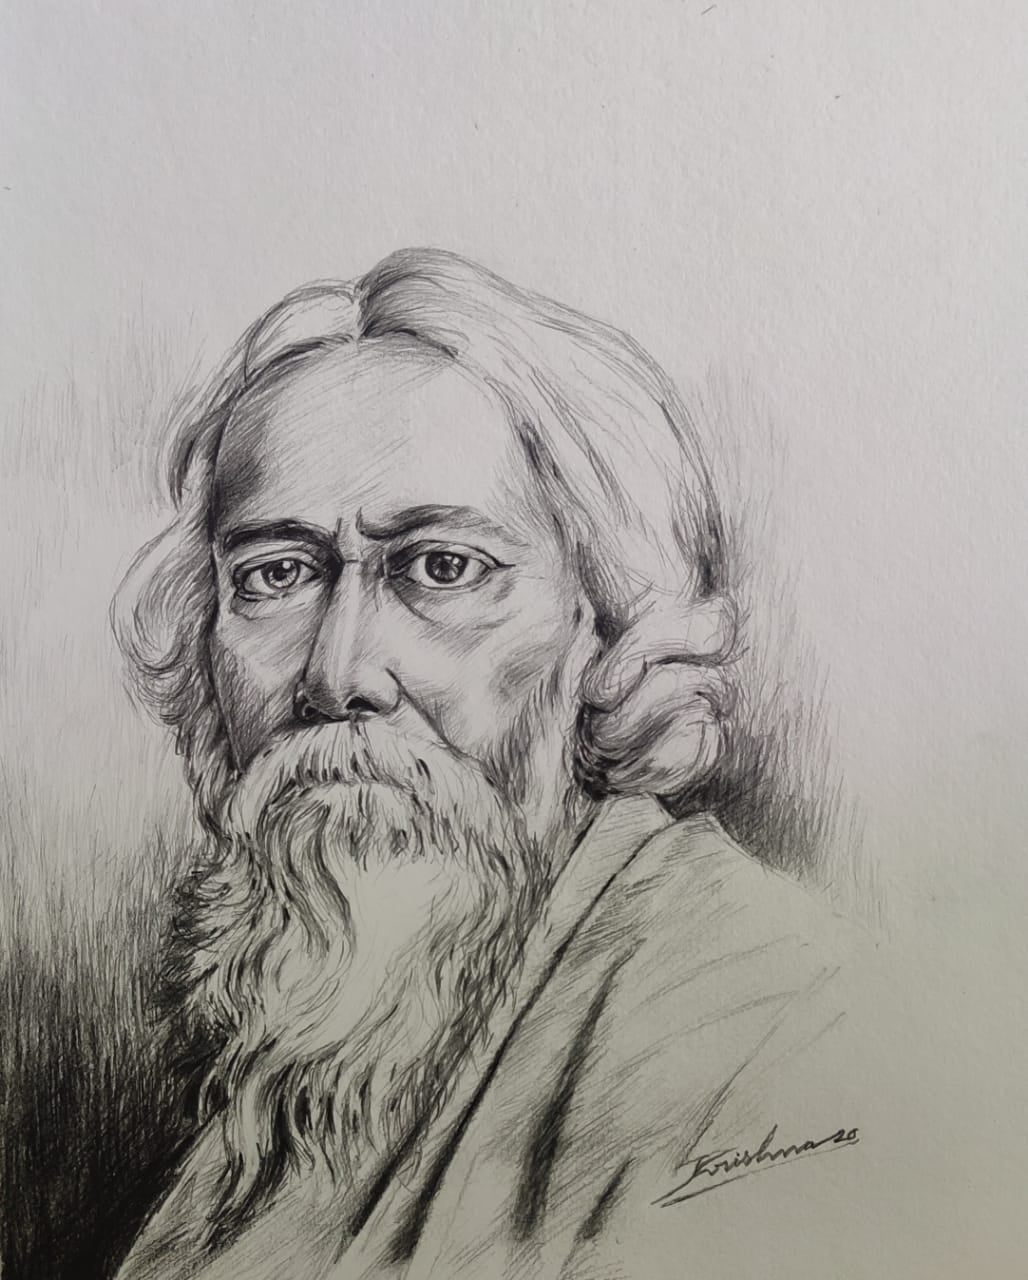 Buy Pencil Sketch Rabindranath Tagore Artwork at Lowest Price By Santanu Sen